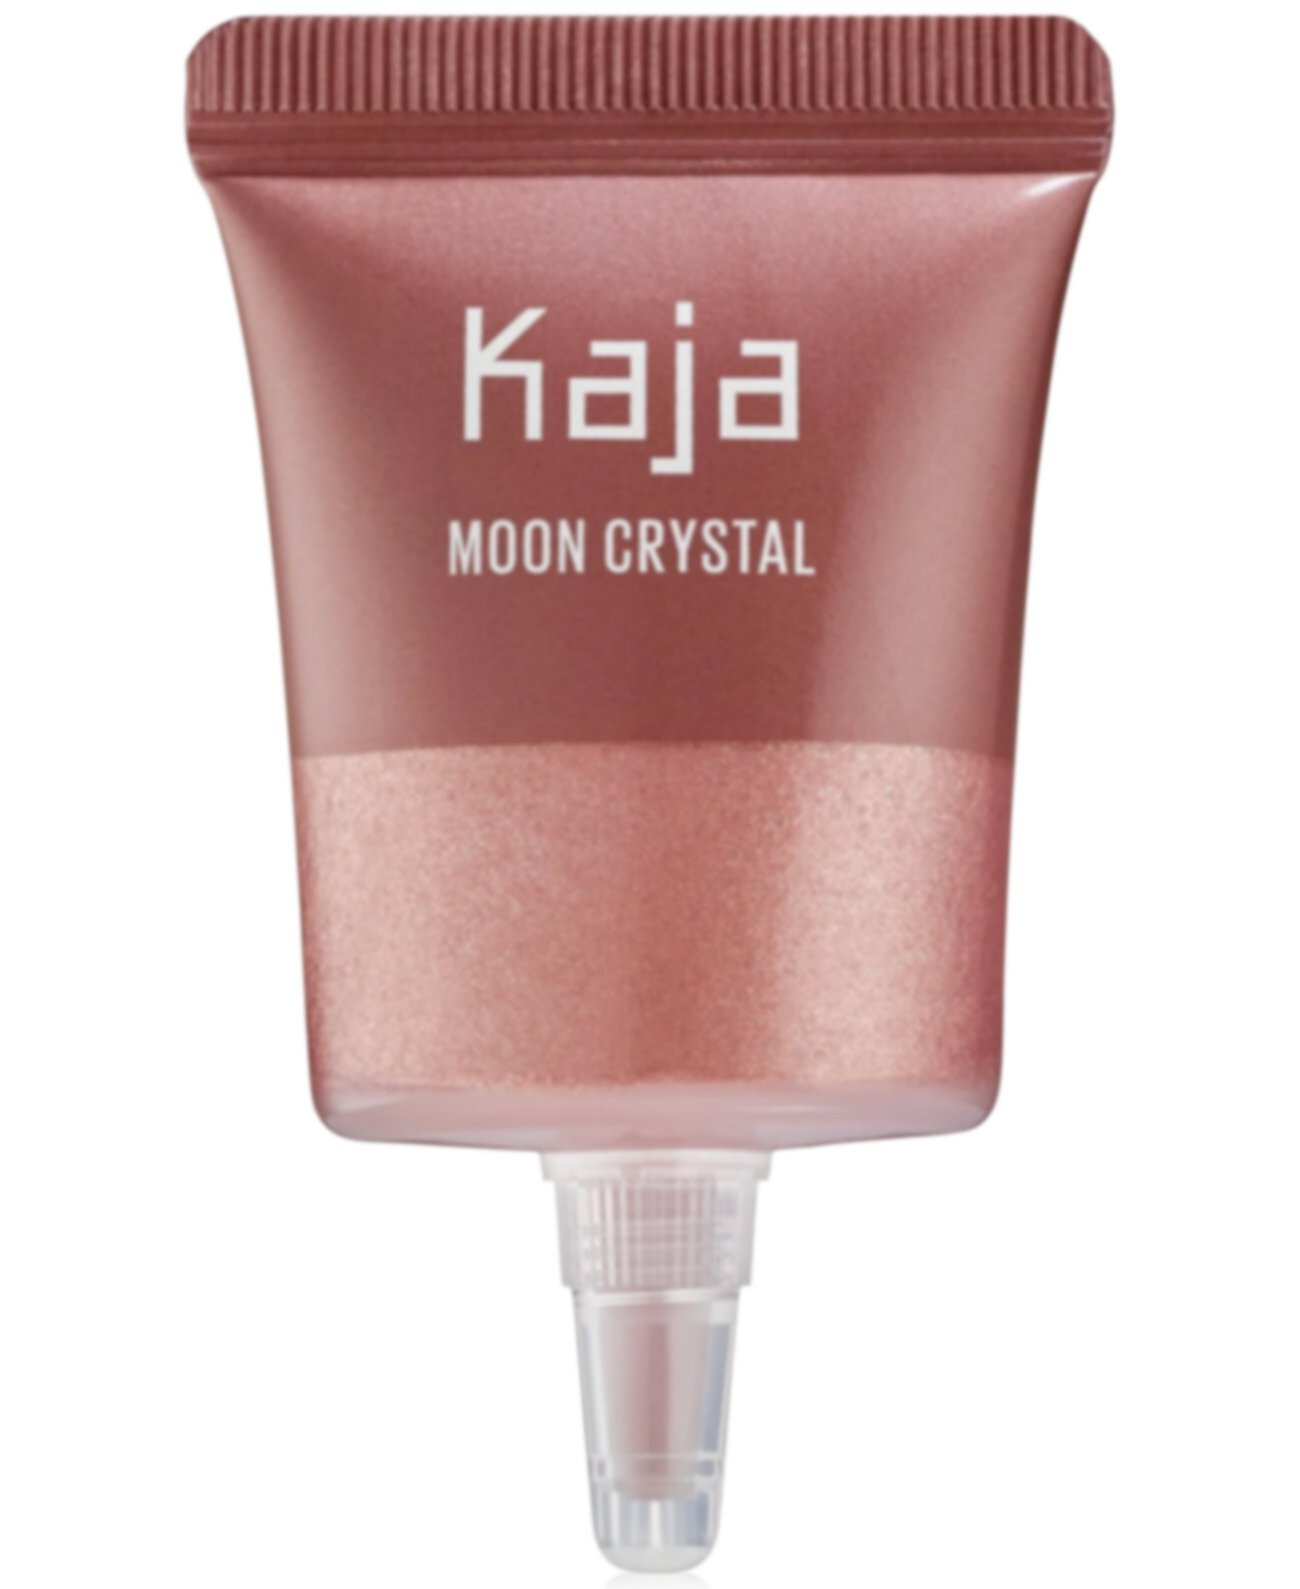 Сверкающий пигмент для глаз Moon Crystal, 0,29 унции. Kaja